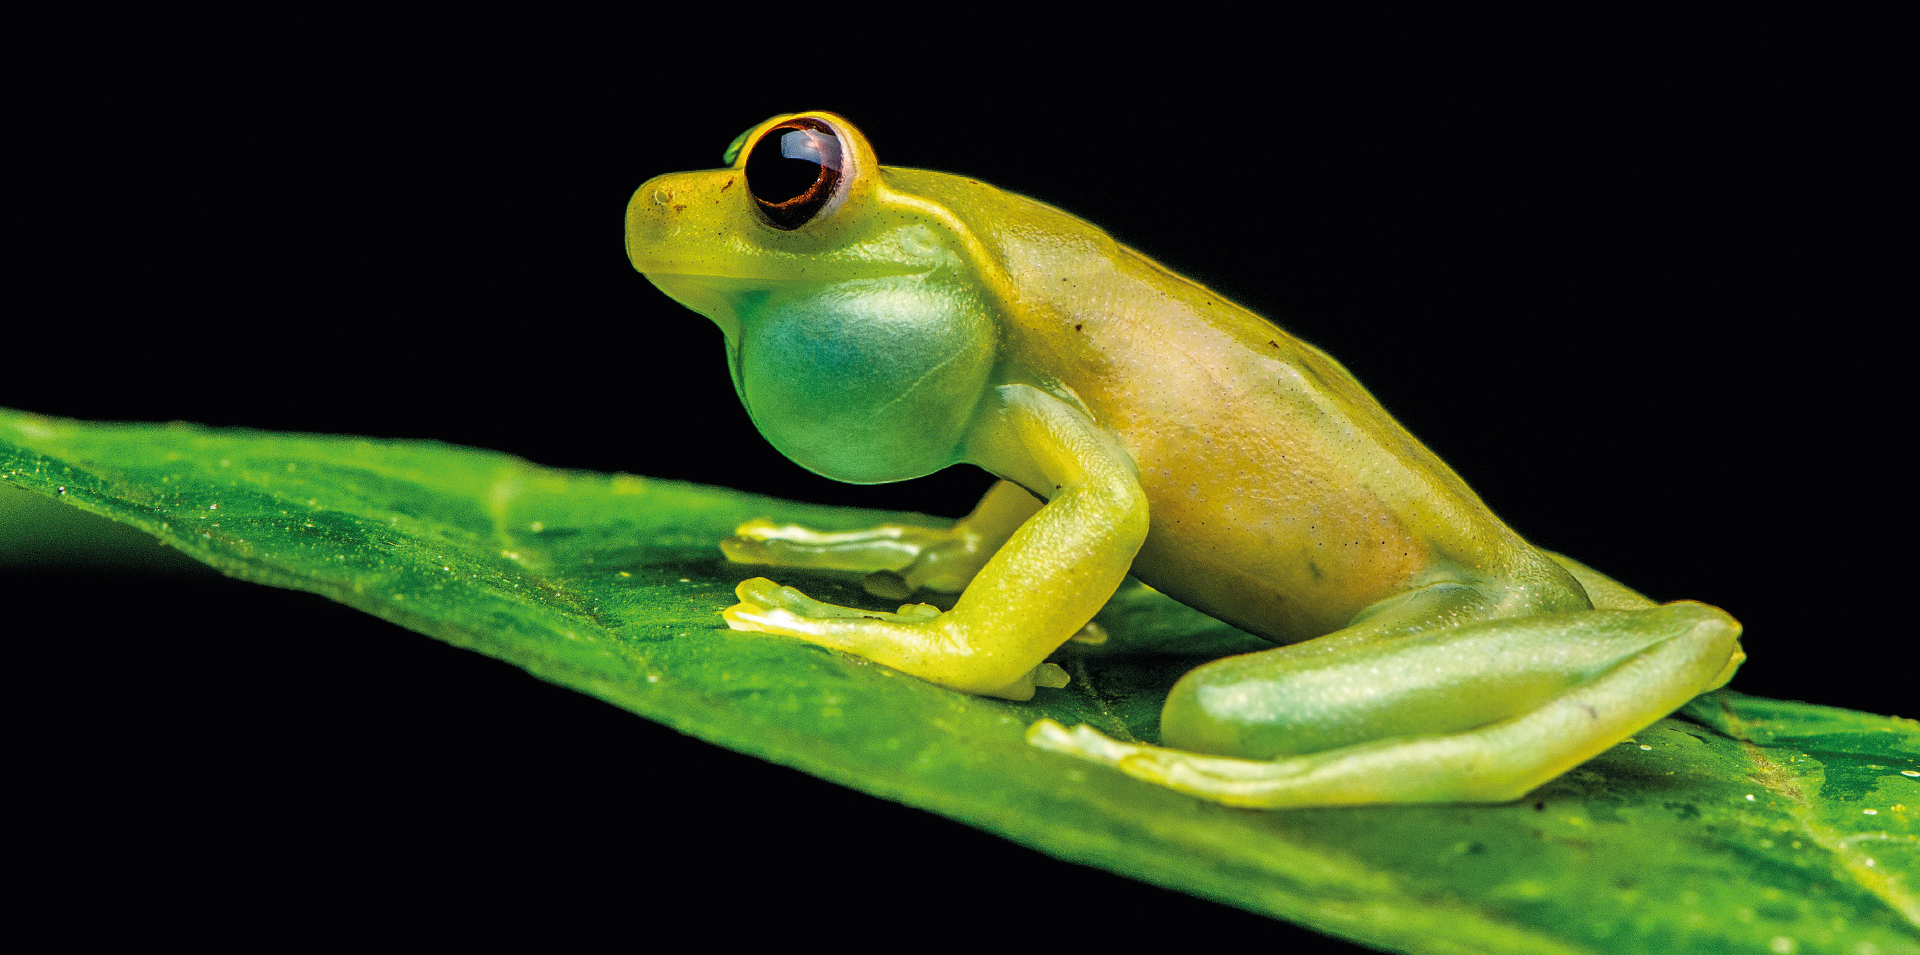 Mashpi's Glass Frog: One of Ecuador's endemic species